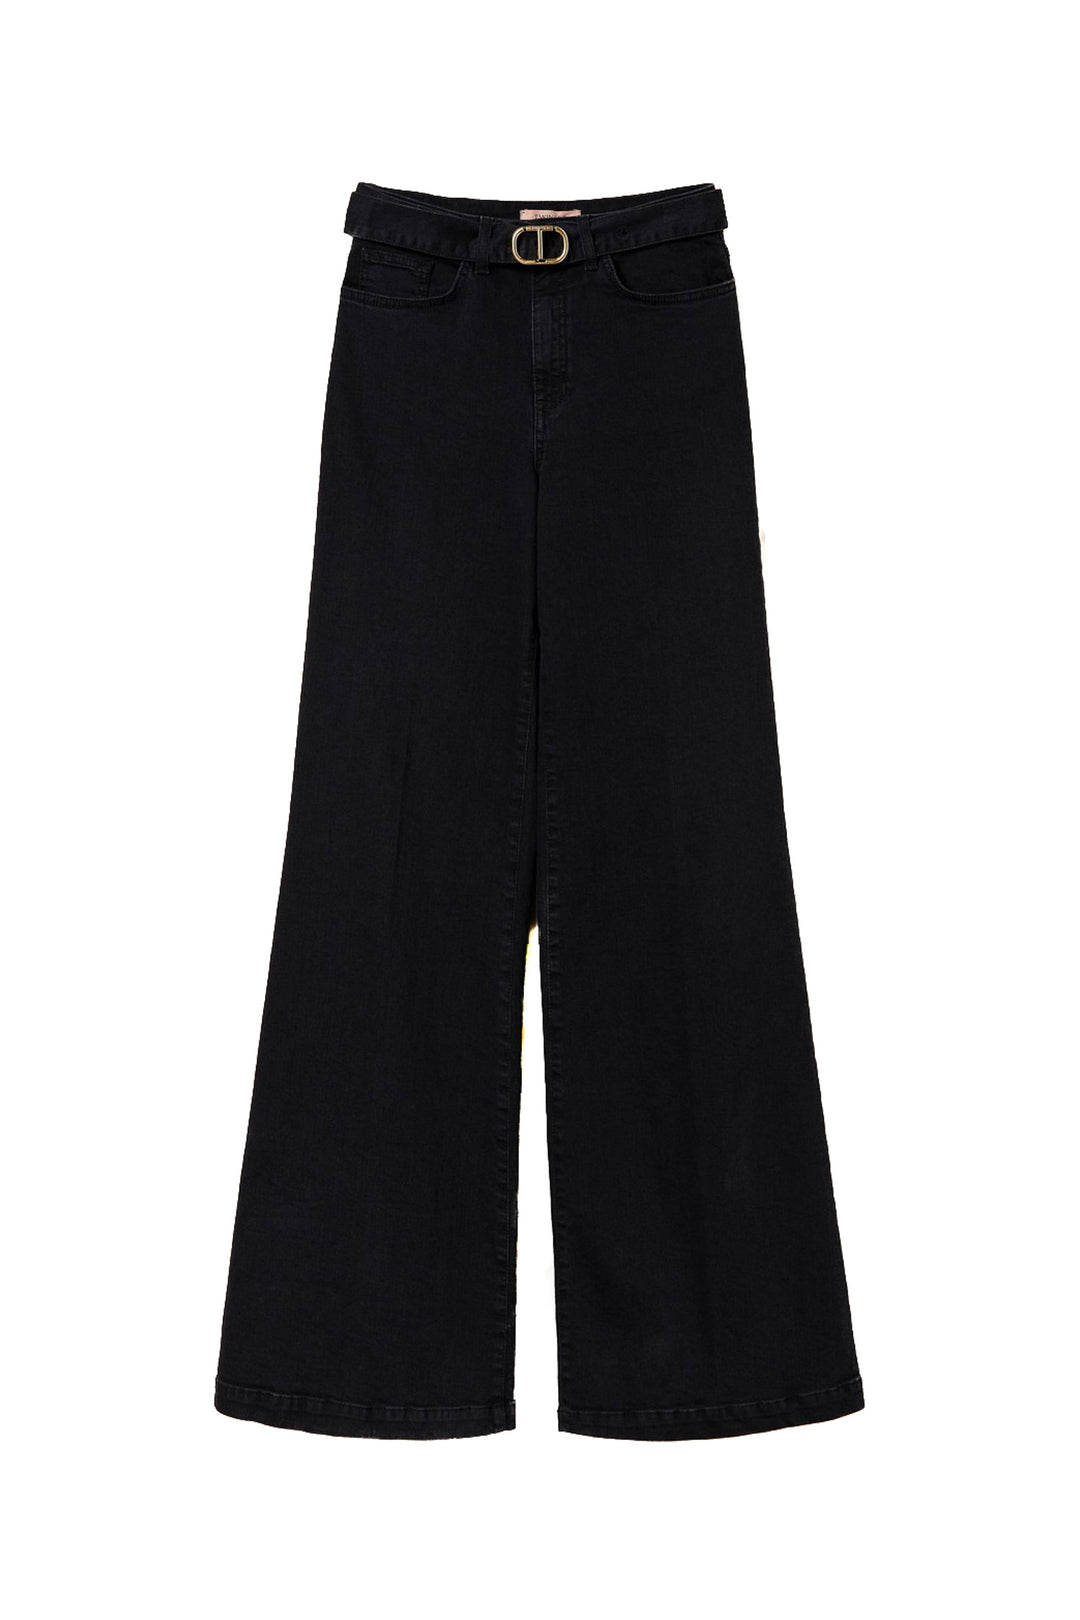 TWINSET Jeans wide leg nero in denim di cotone stretch con cintura - Mancinelli 1954